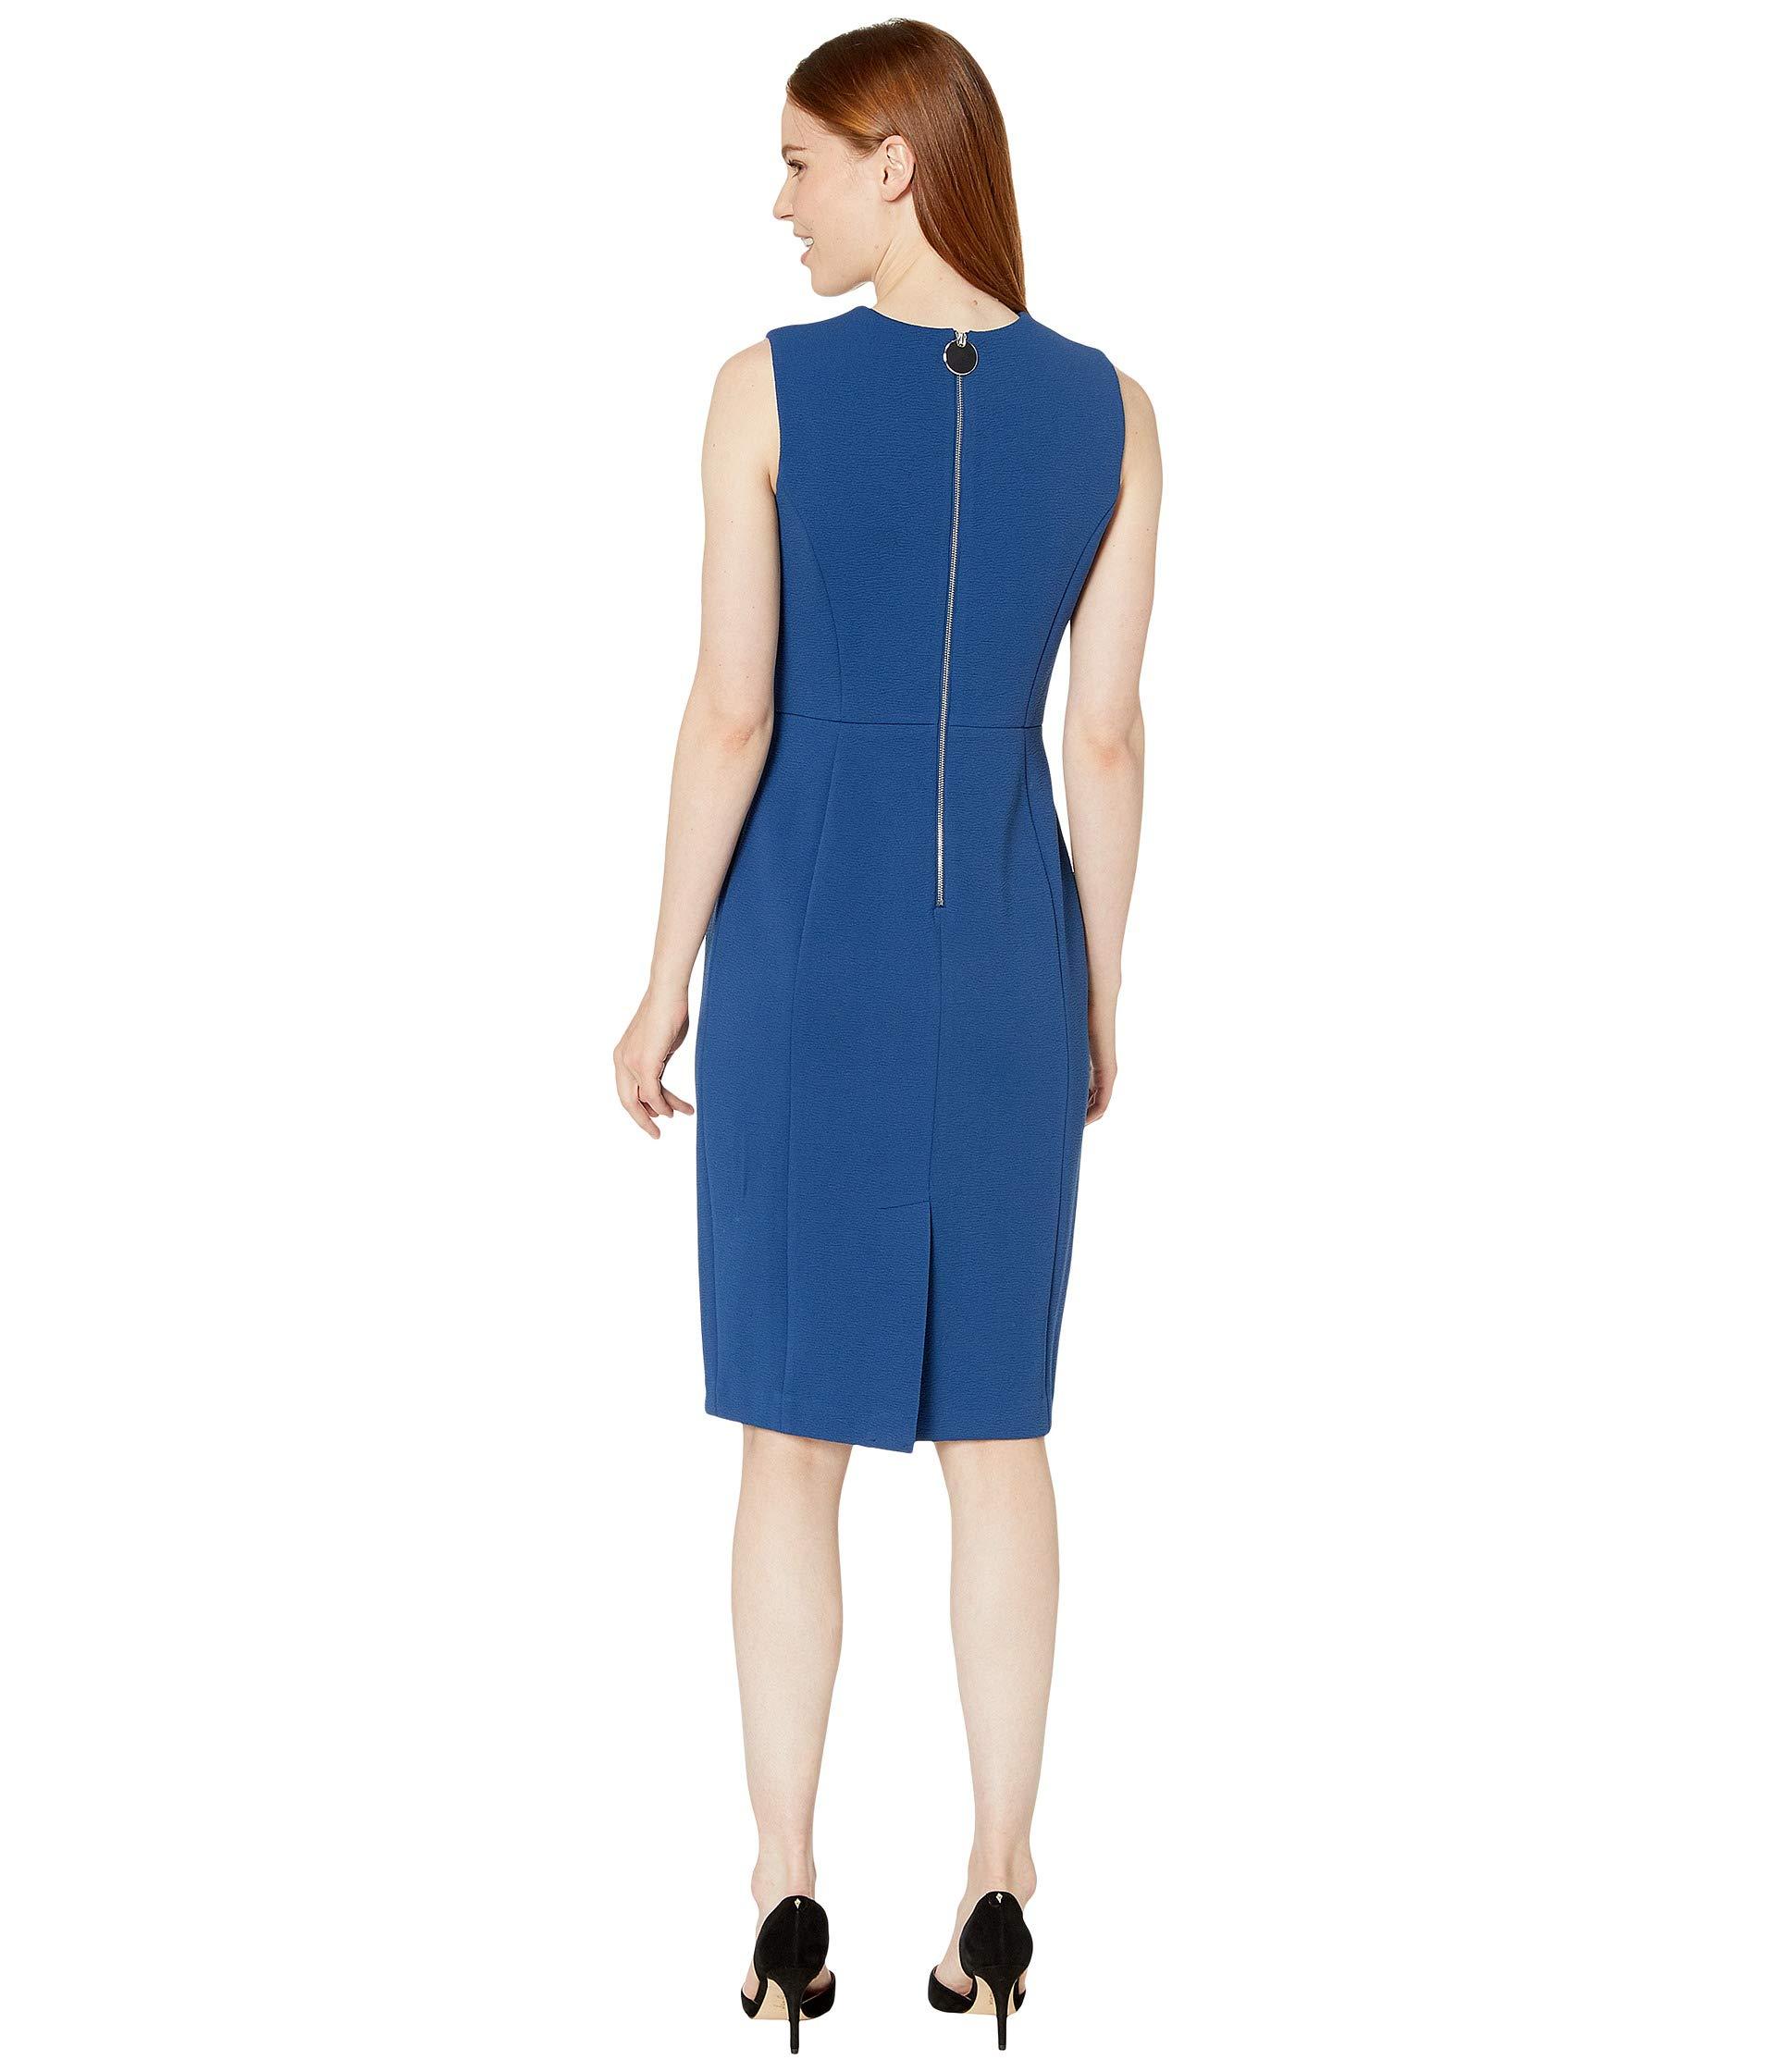 Calvin Klein Synthetic Sleeveless Sheath Dress in Blue - Lyst